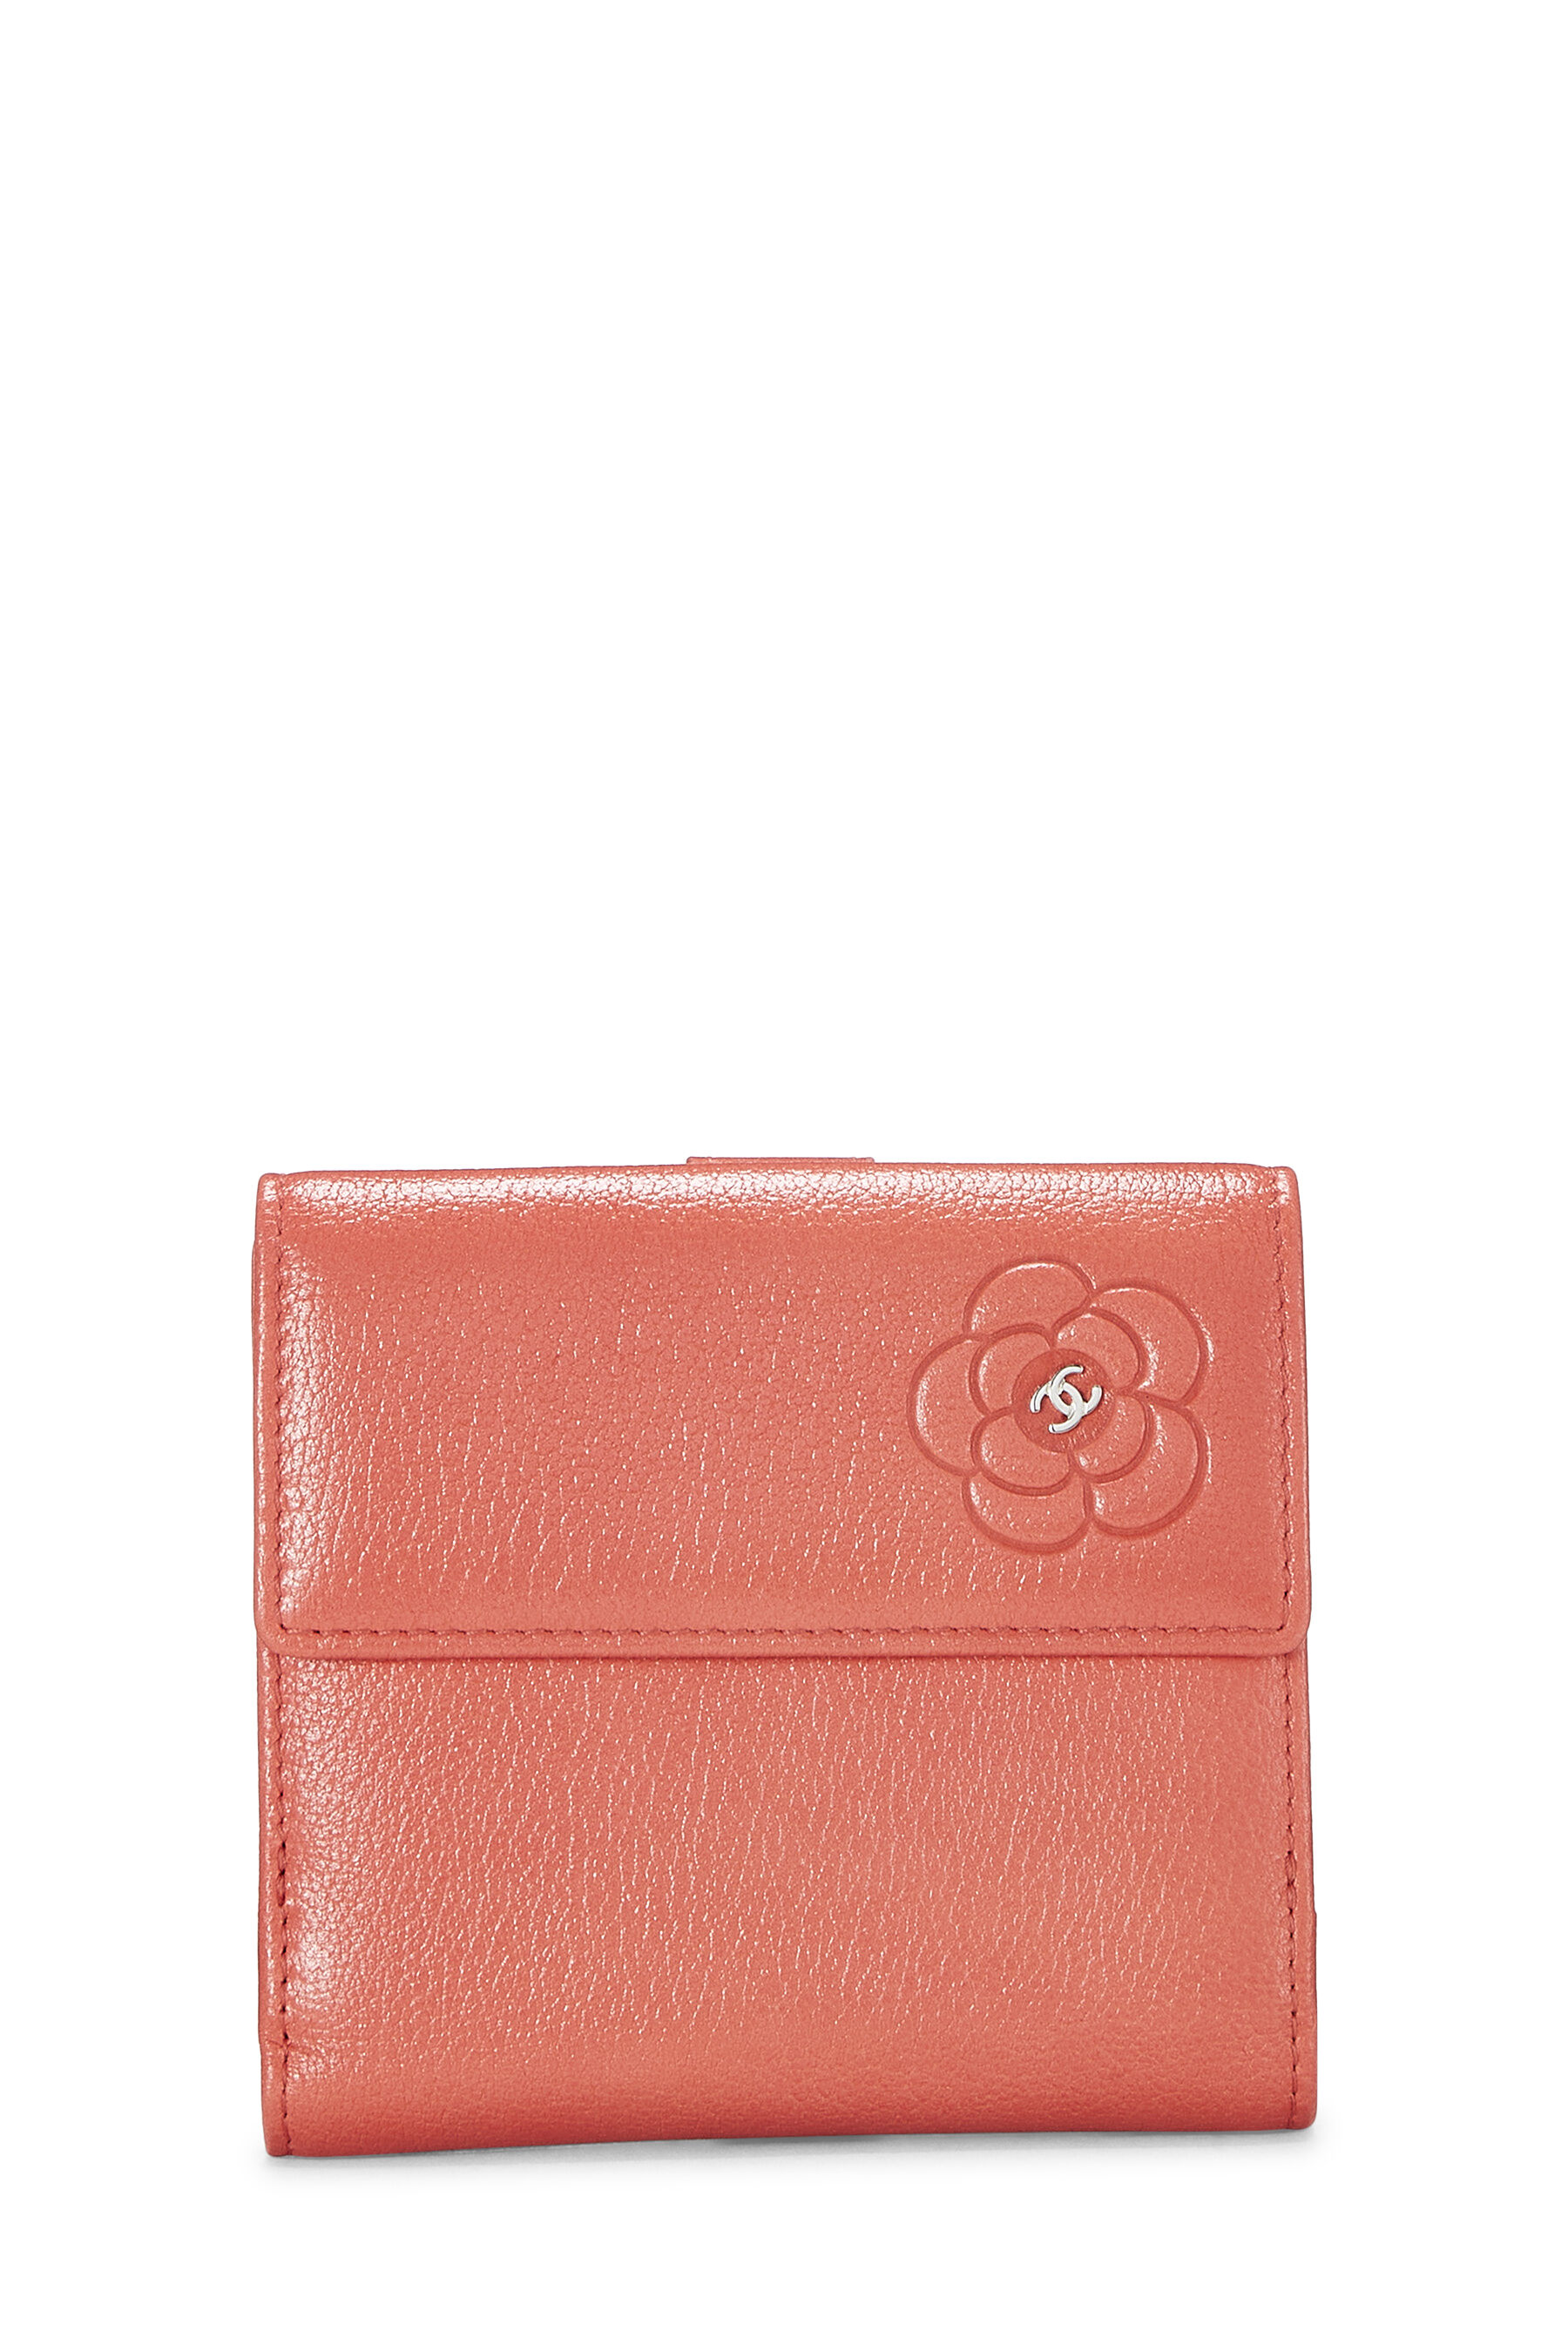 Louis Vuitton Iris Compact Wallet, Pink, One Size